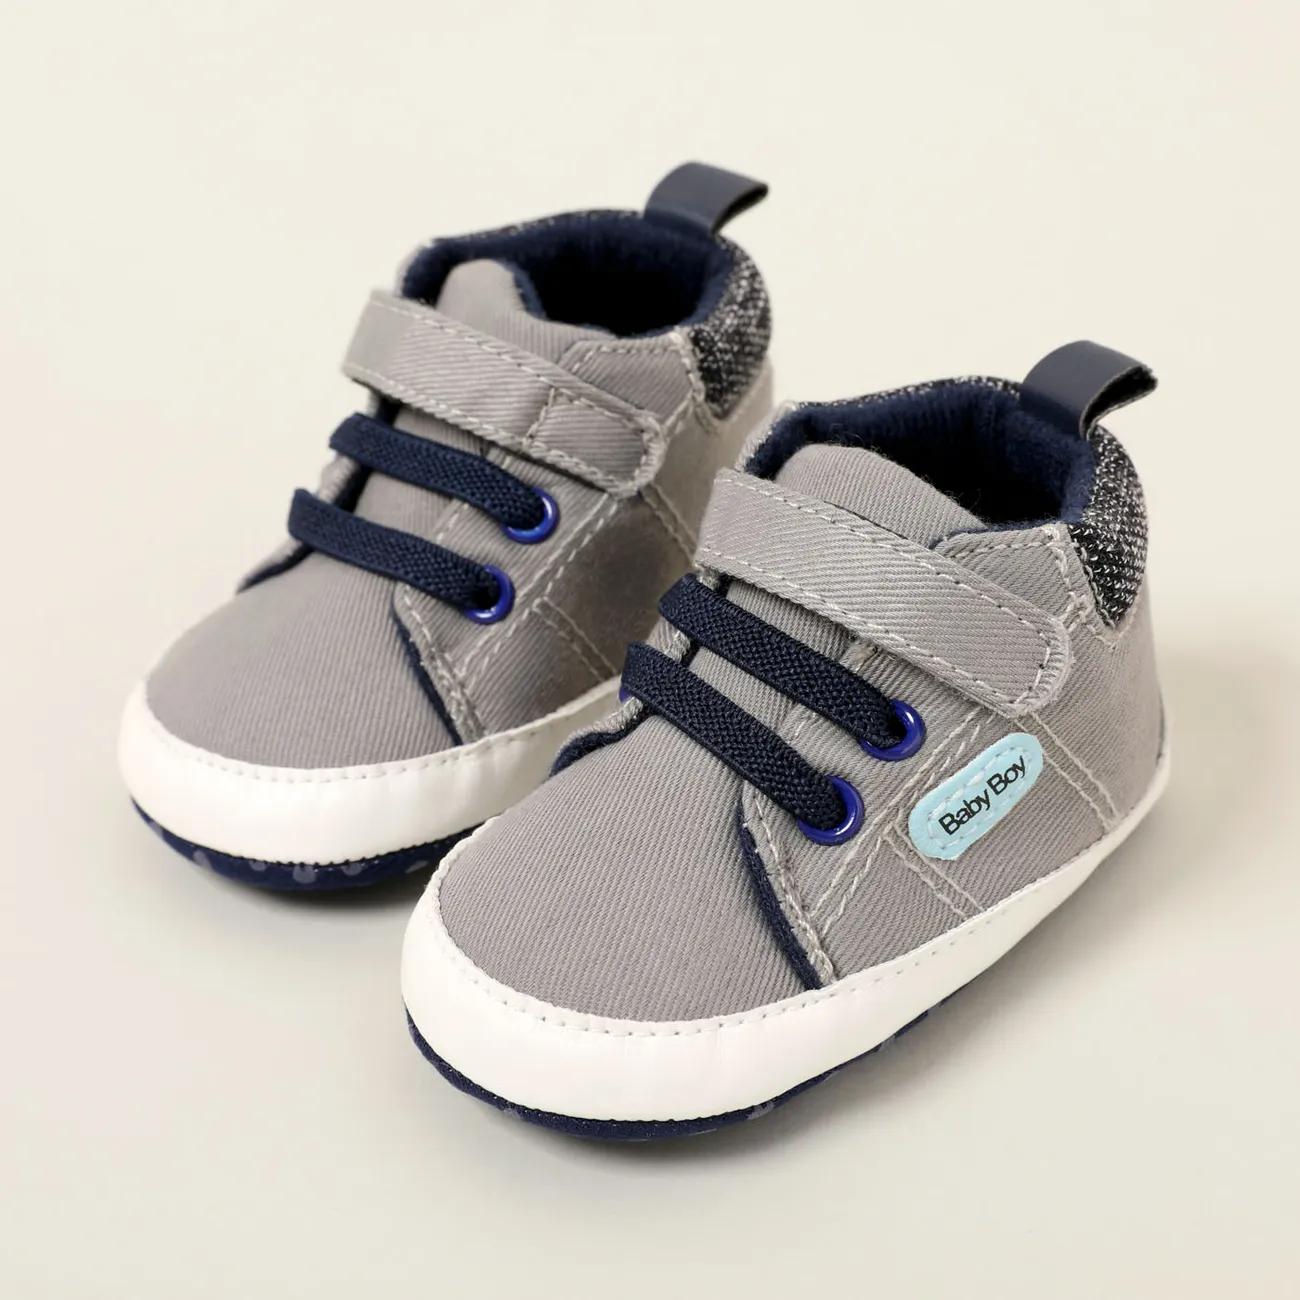 Chaussures de marche bébé garçon